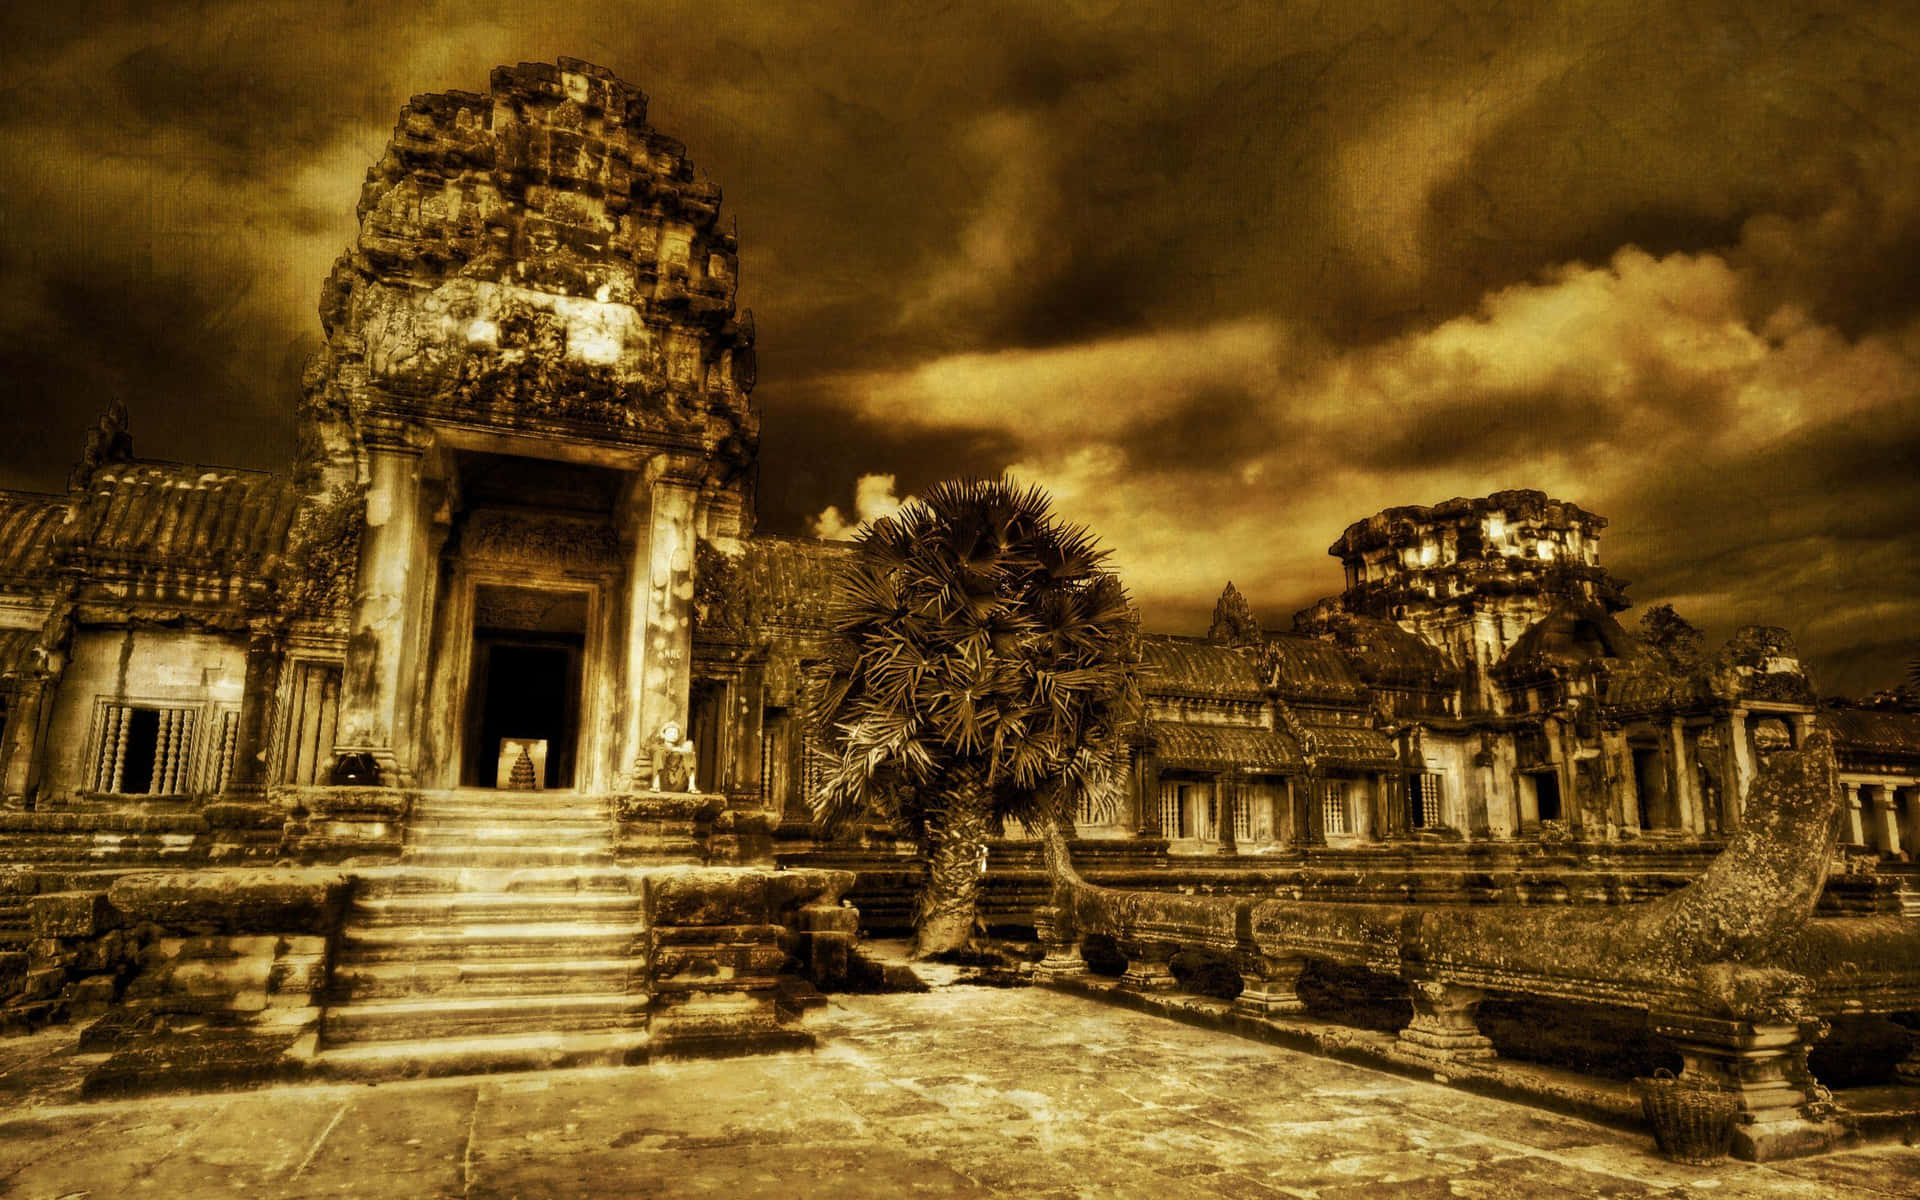 Einatemberaubender Blick Auf Den Tempel Wat Phra That Doi Suthep In Chiang Mai, Thailand